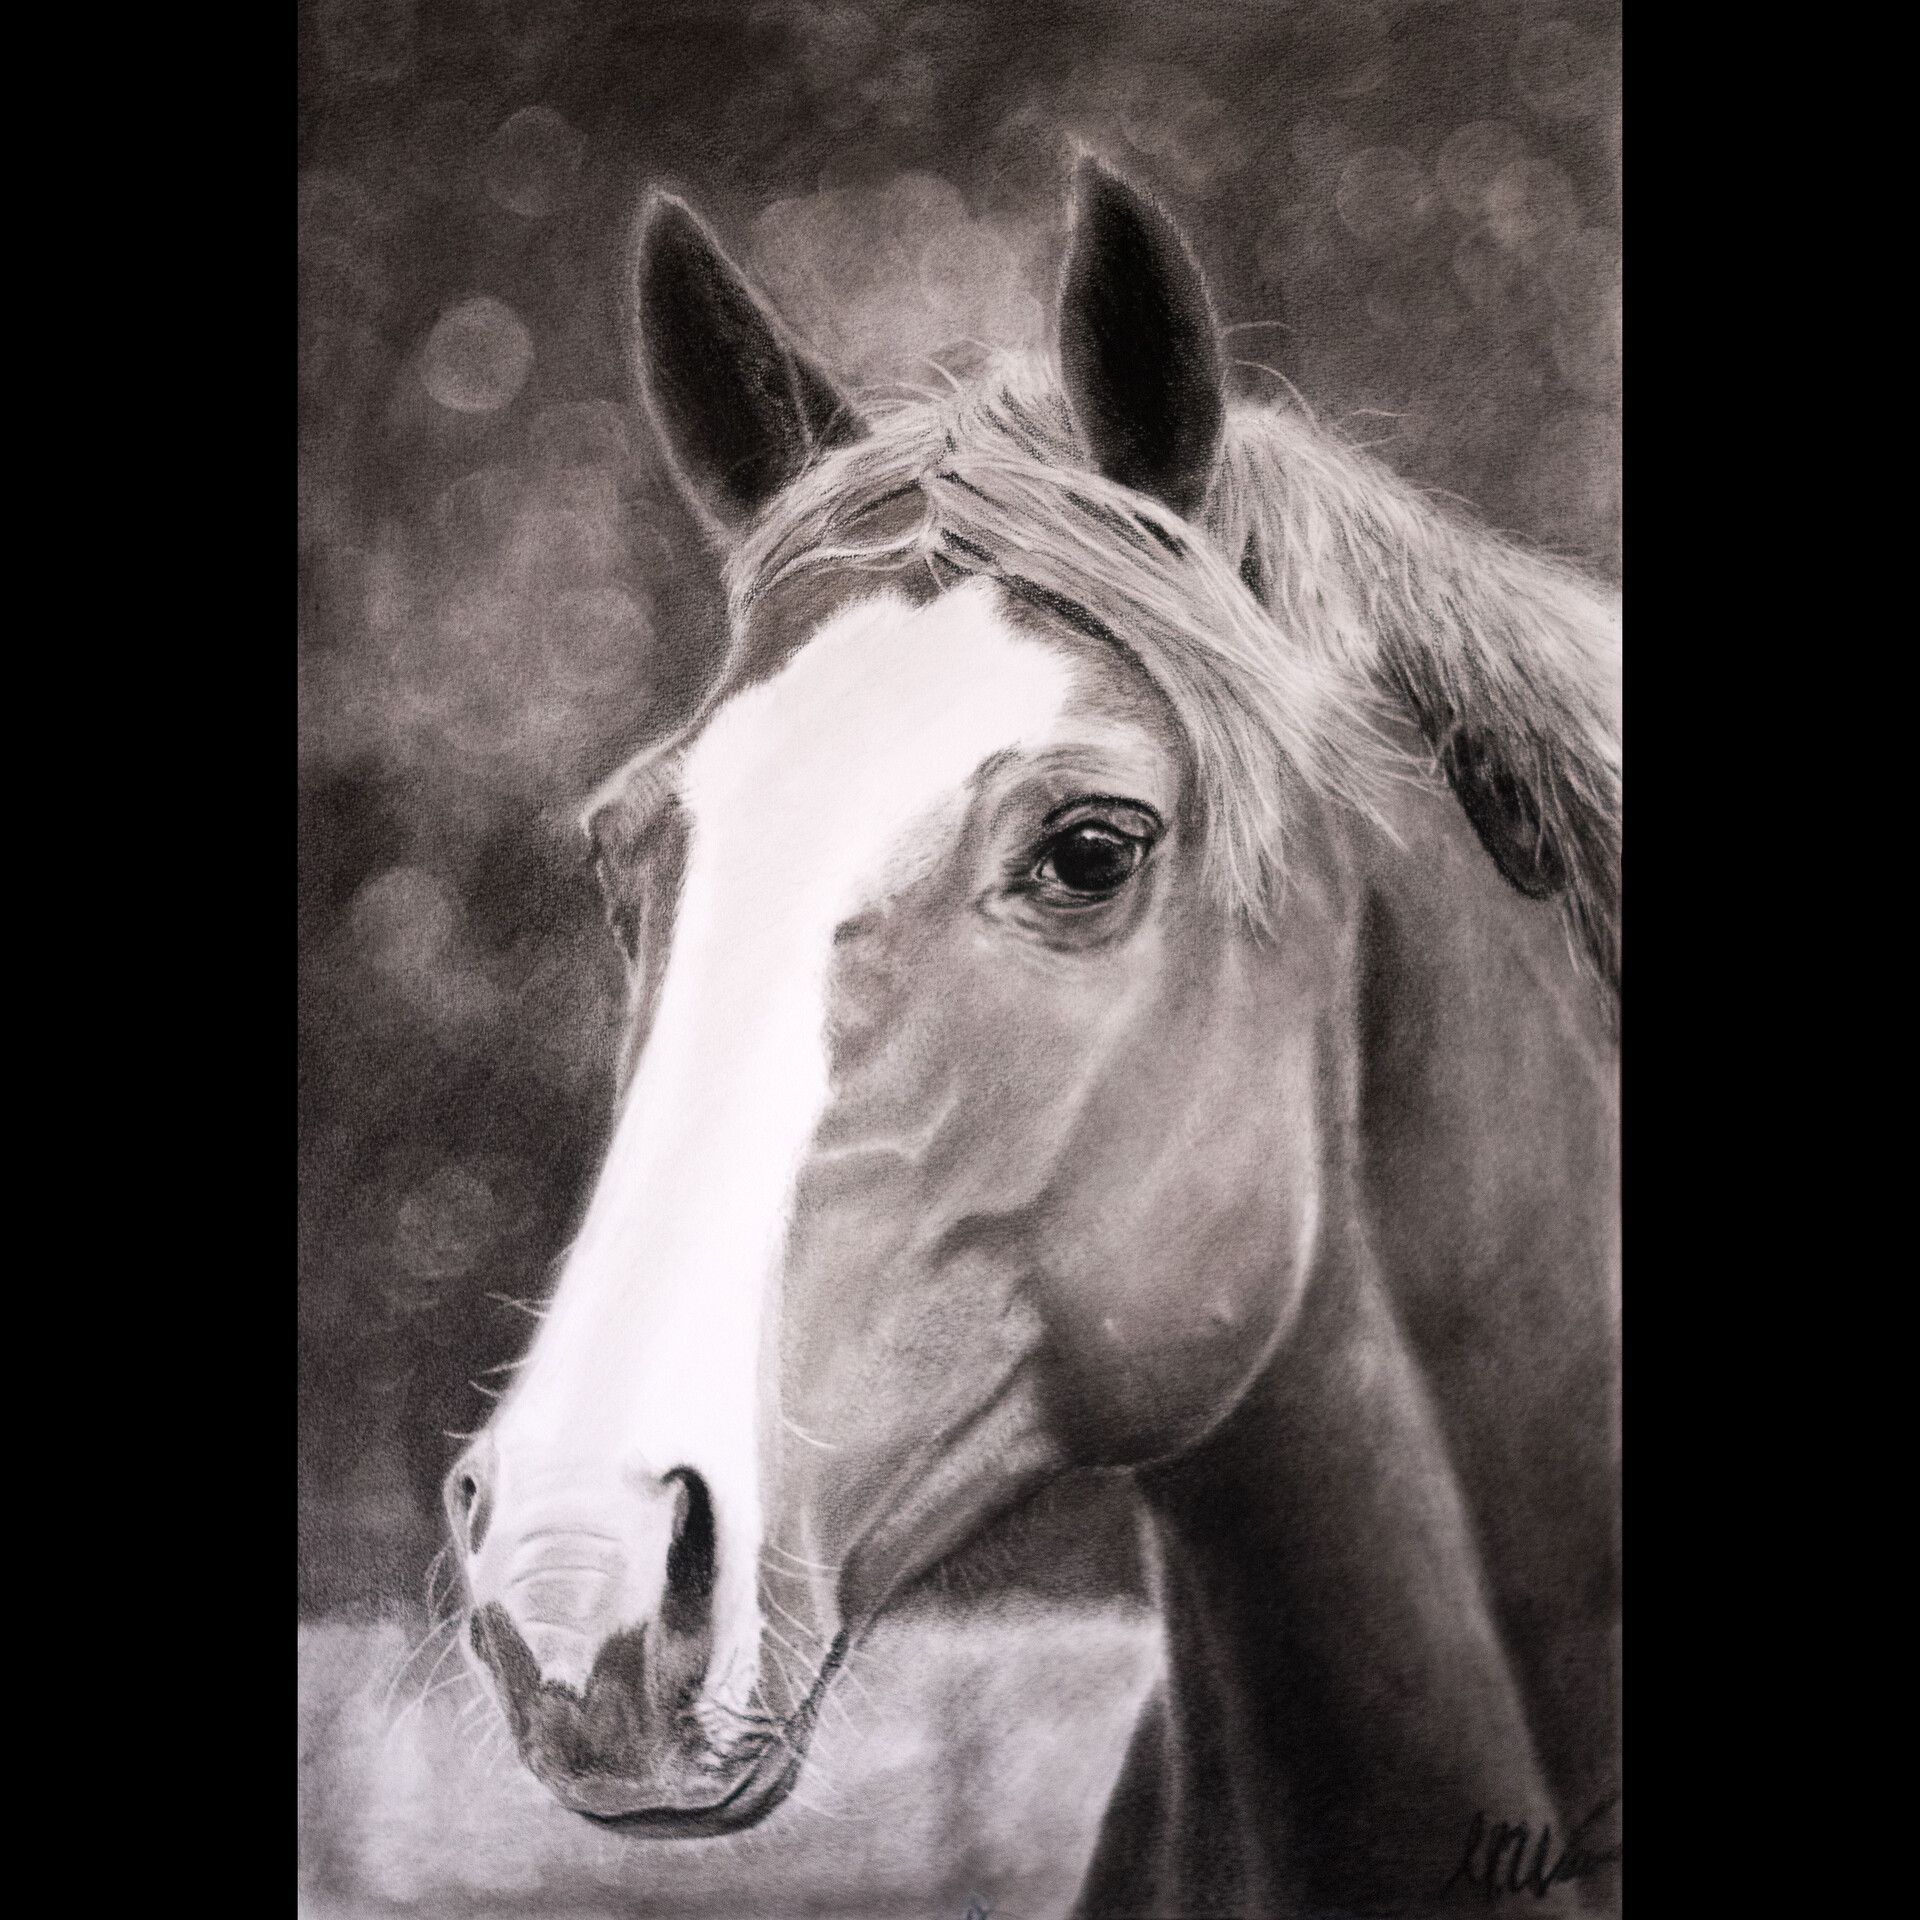 ArtStation - Charcoal drawing of a Peruvian Paso Horse